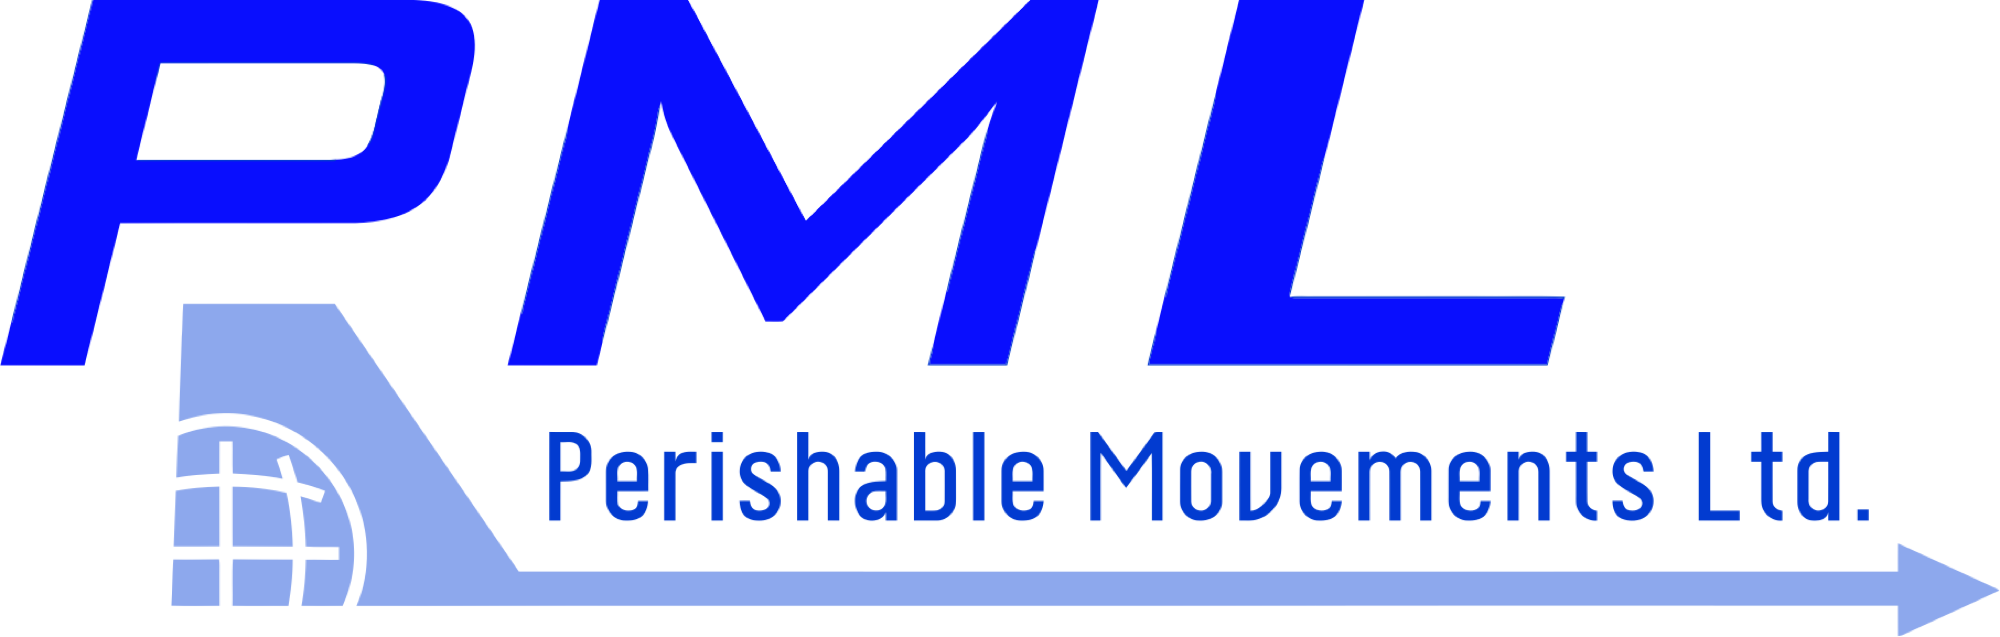 Perishable Movements Ltd